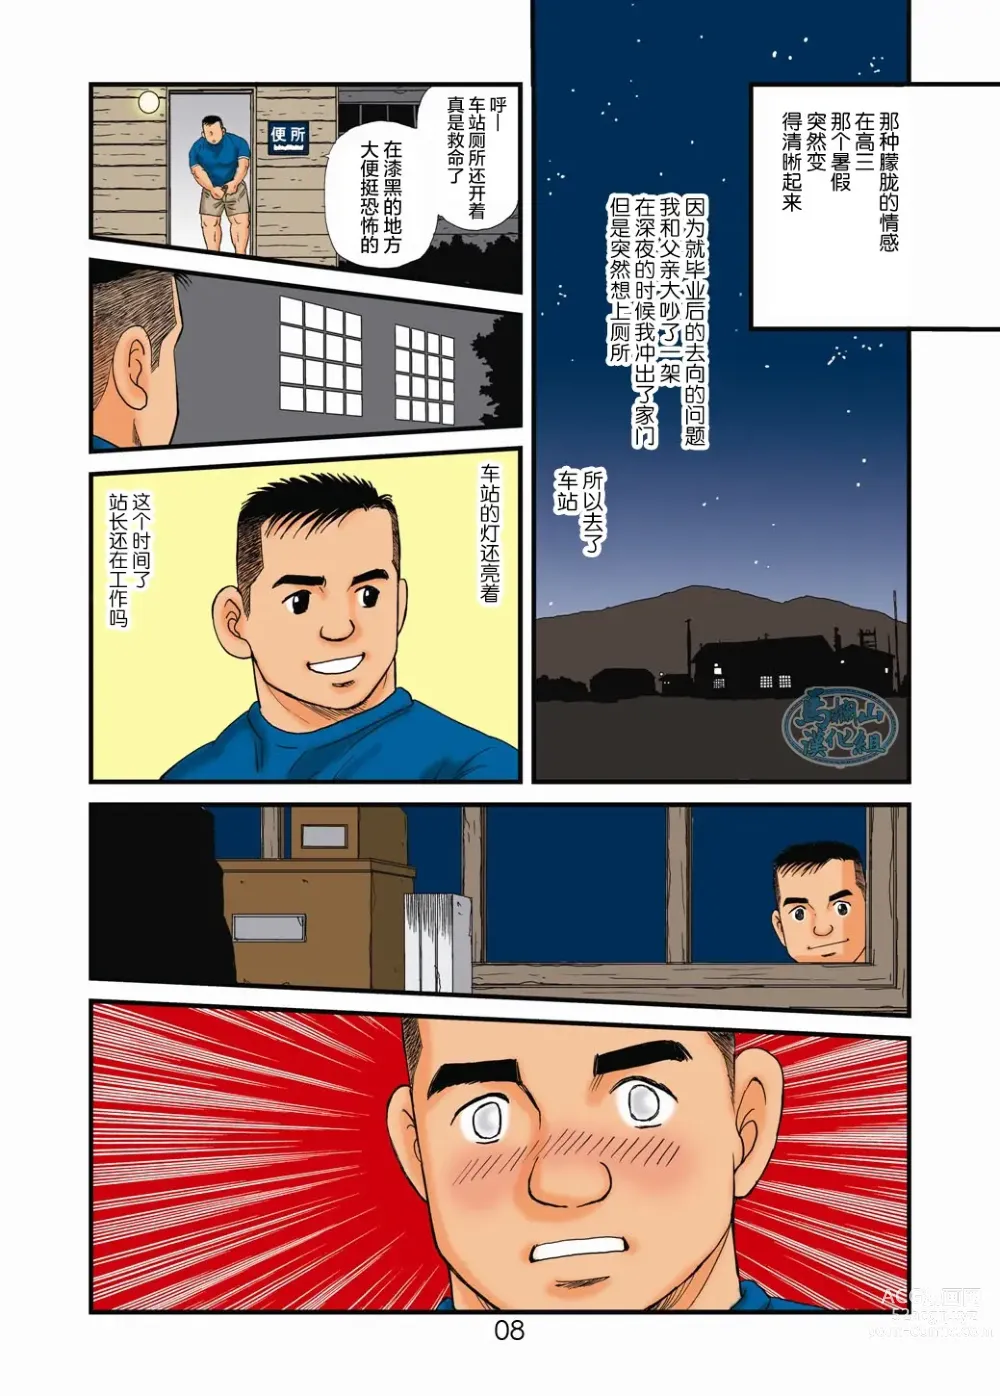 Page 8 of manga 「铁道员的浪漫」第一回 深夜的站长室